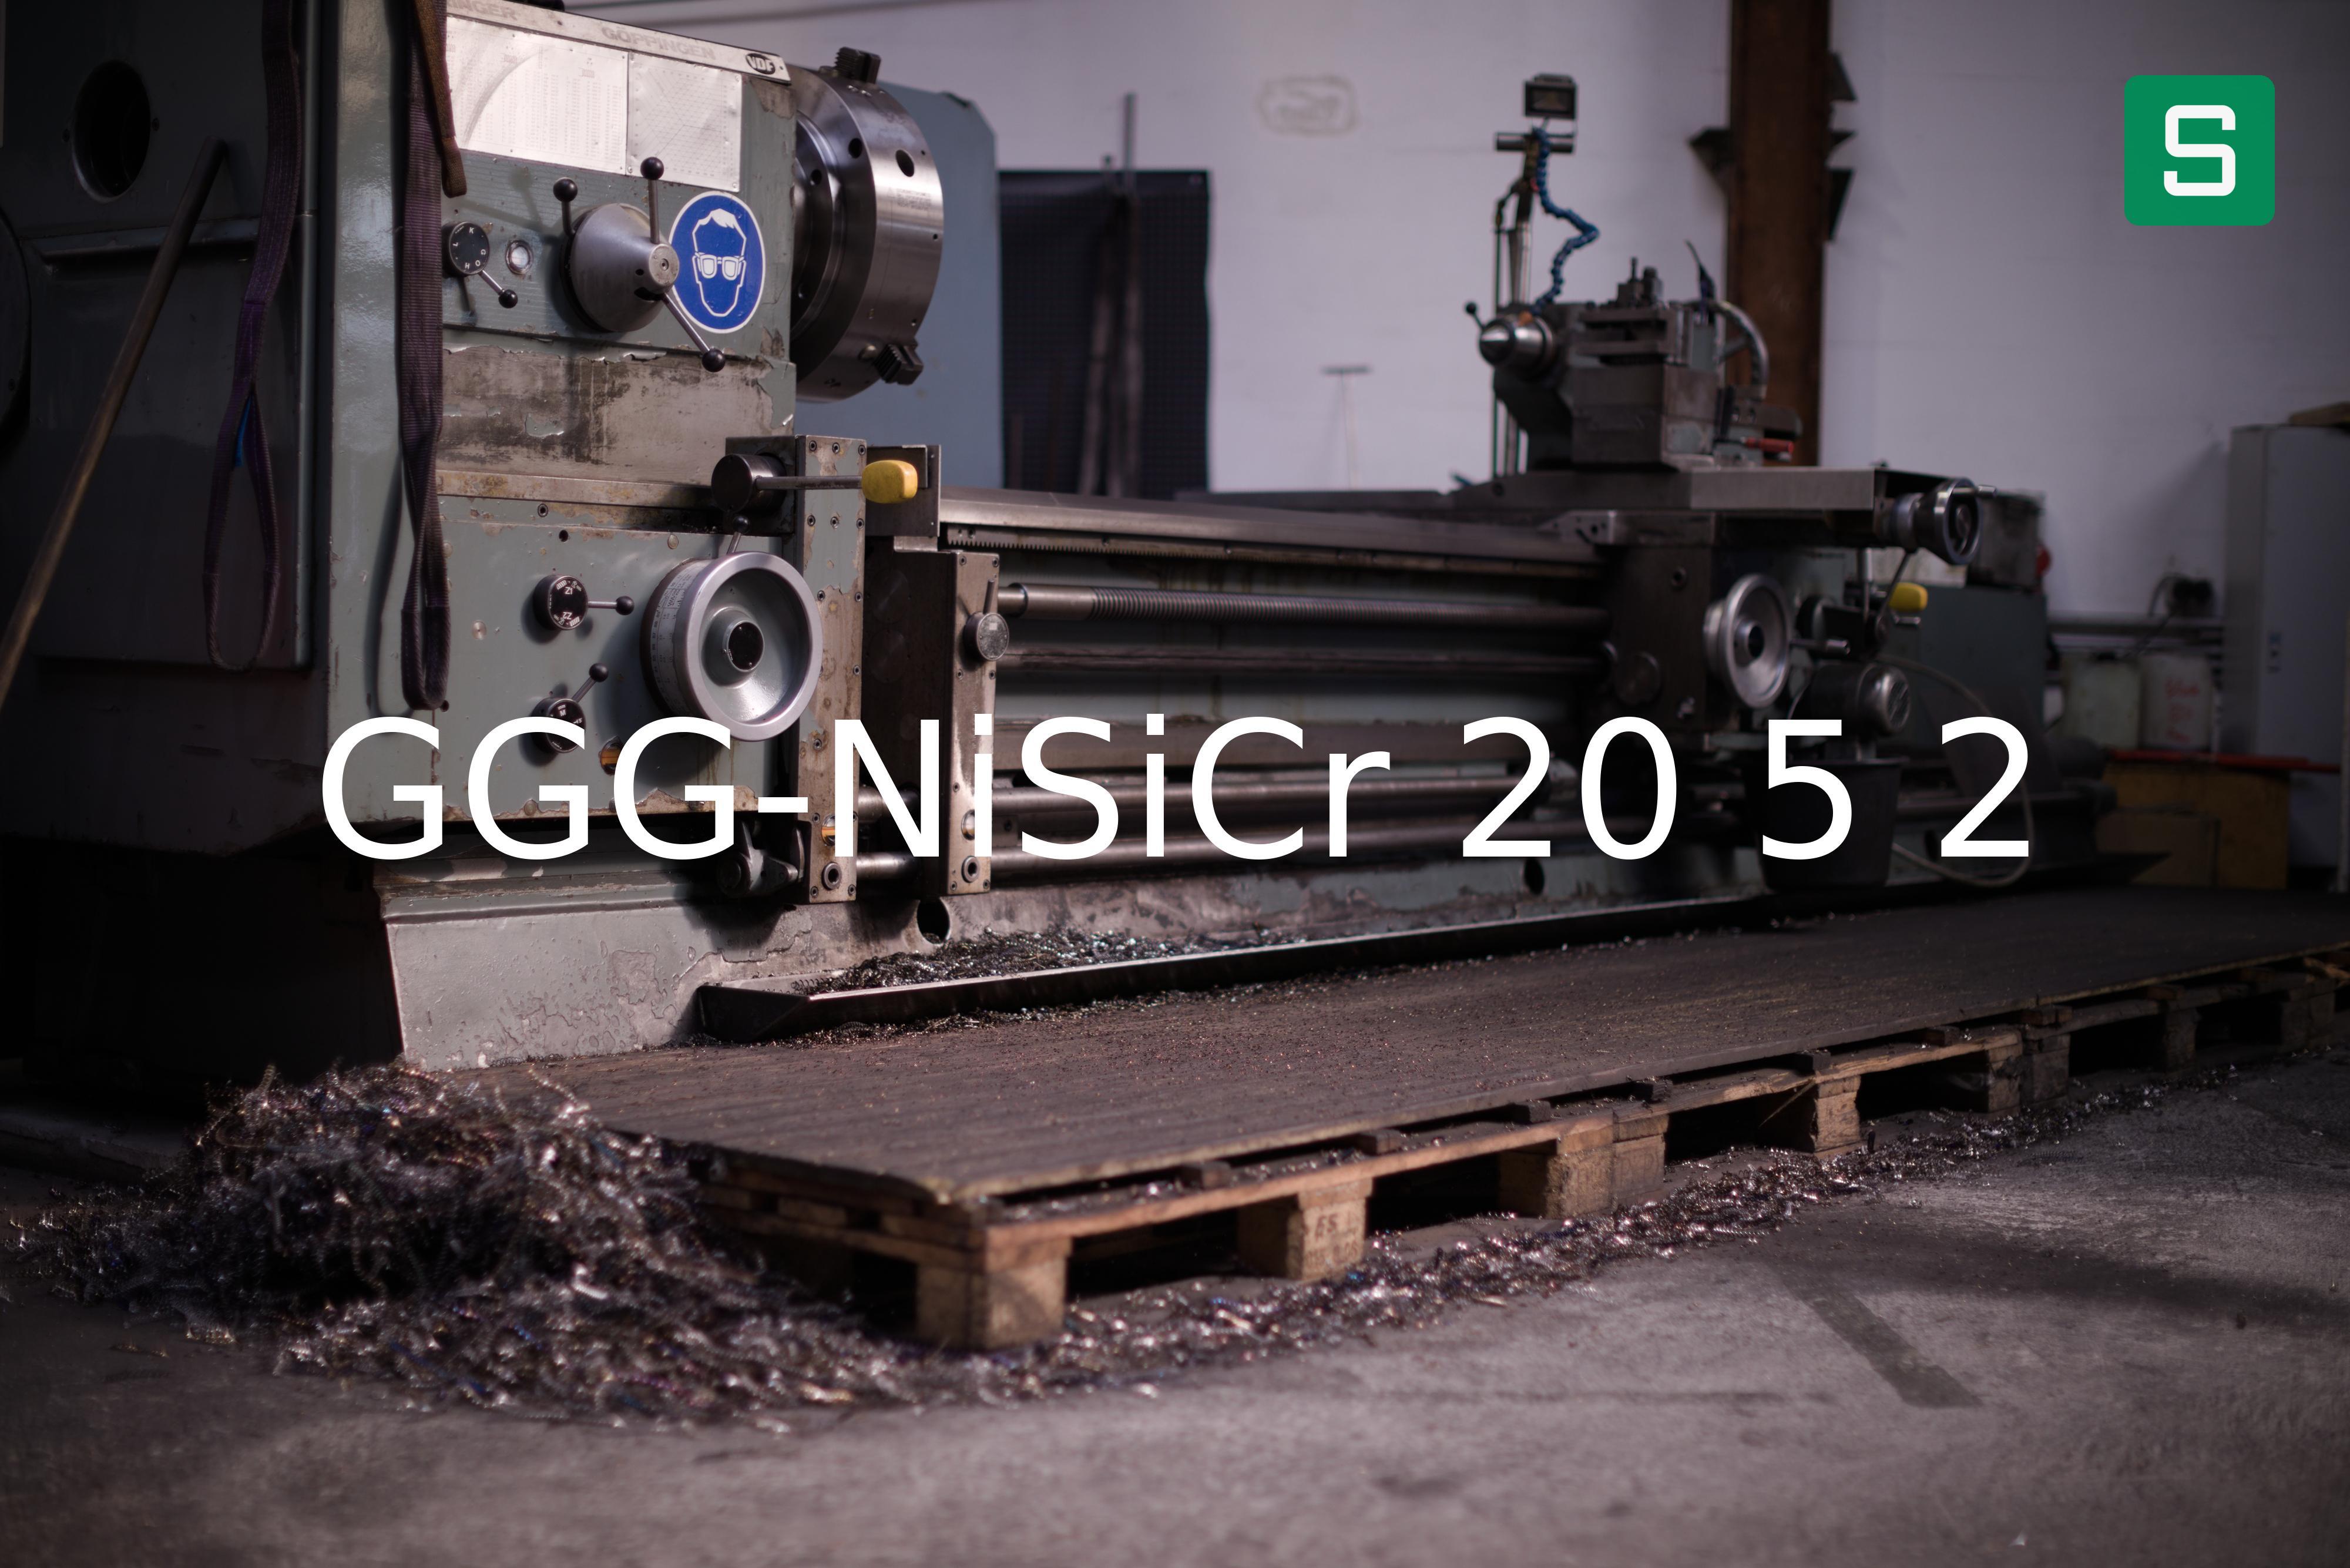 Steel Material: GGG-NiSiCr 20 5 2